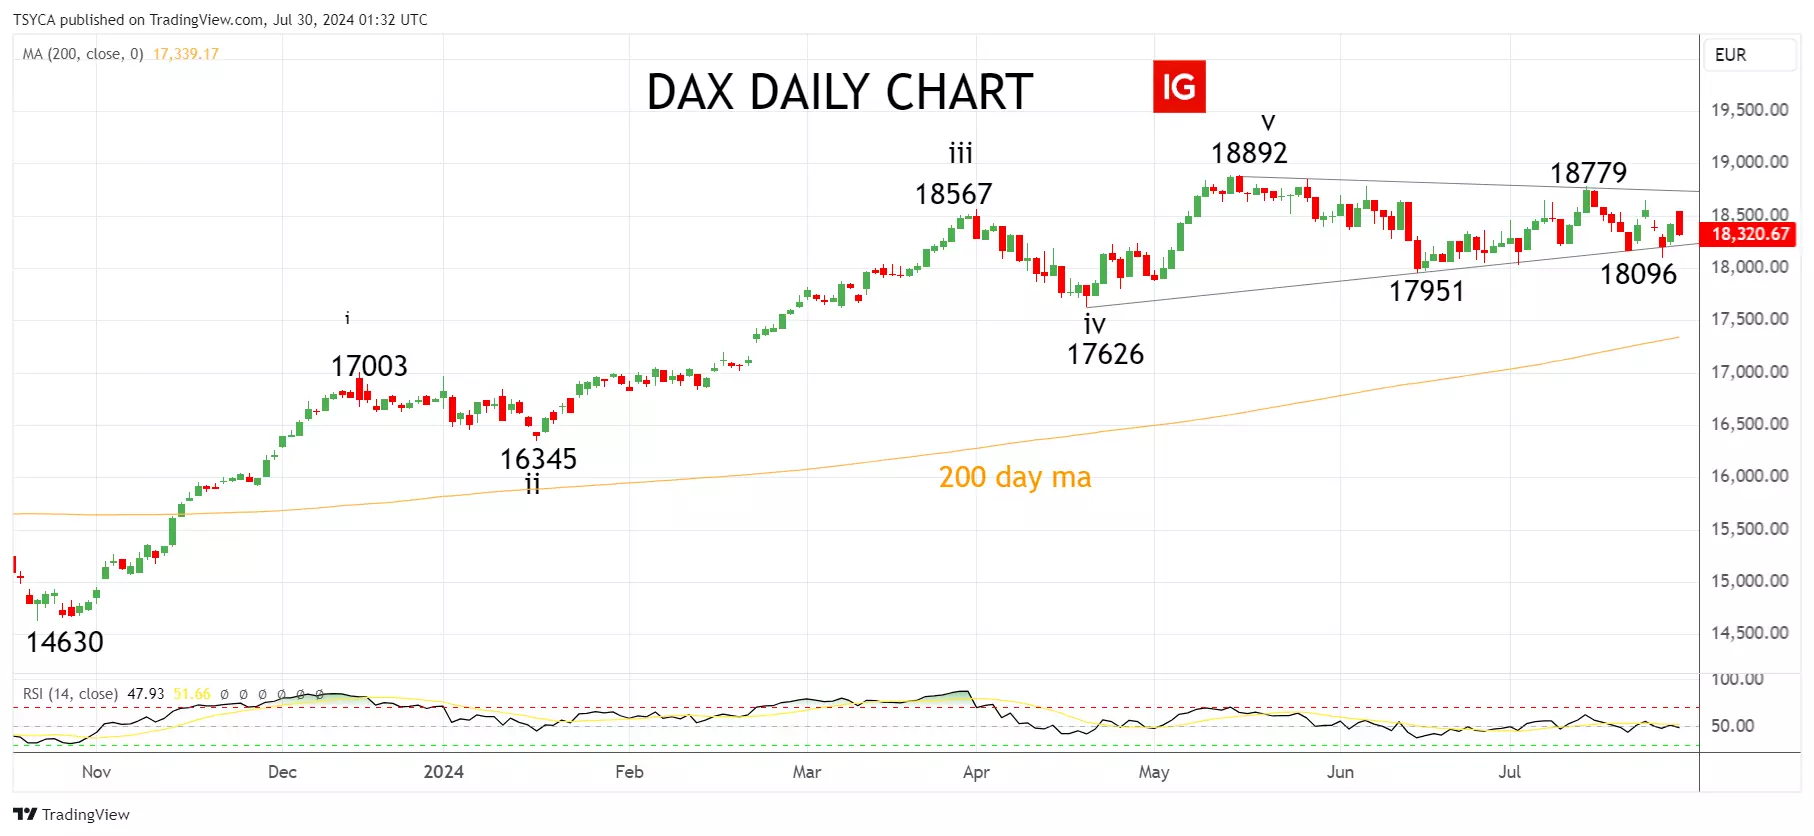 DAX daily chart